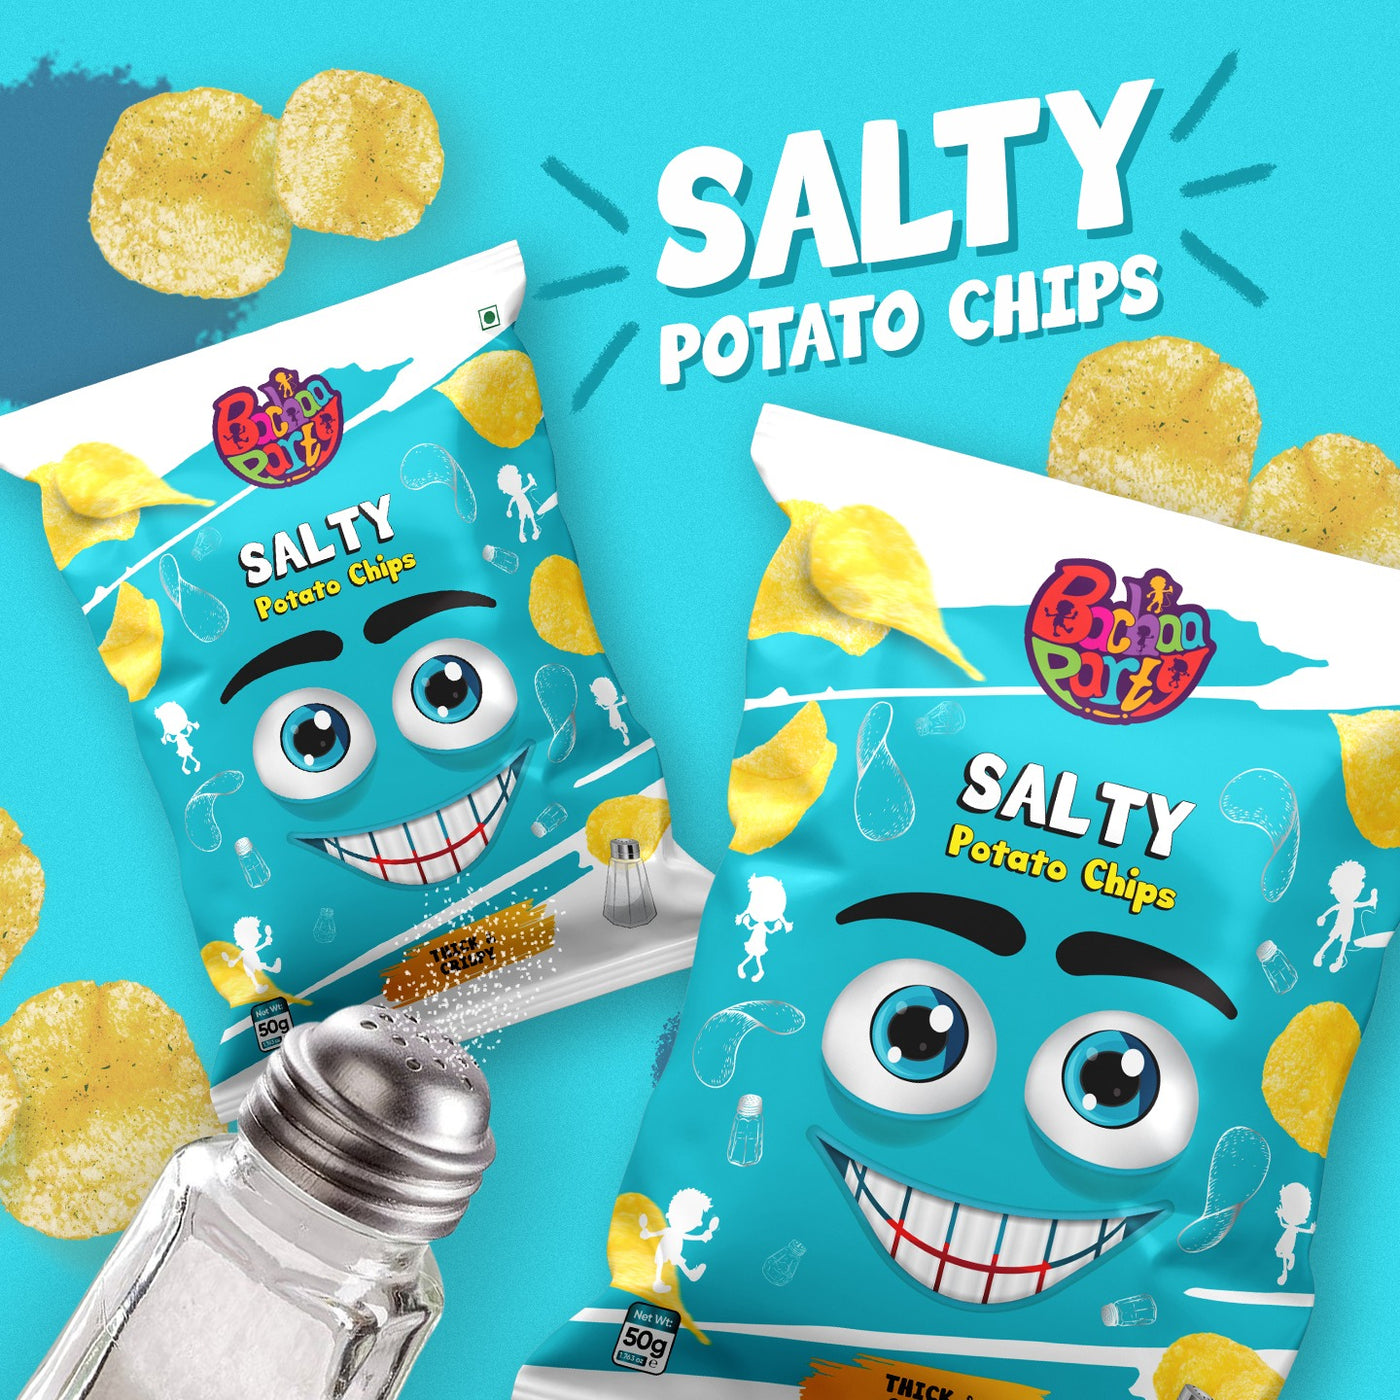 Bachaa Party Potato Chips | Salty